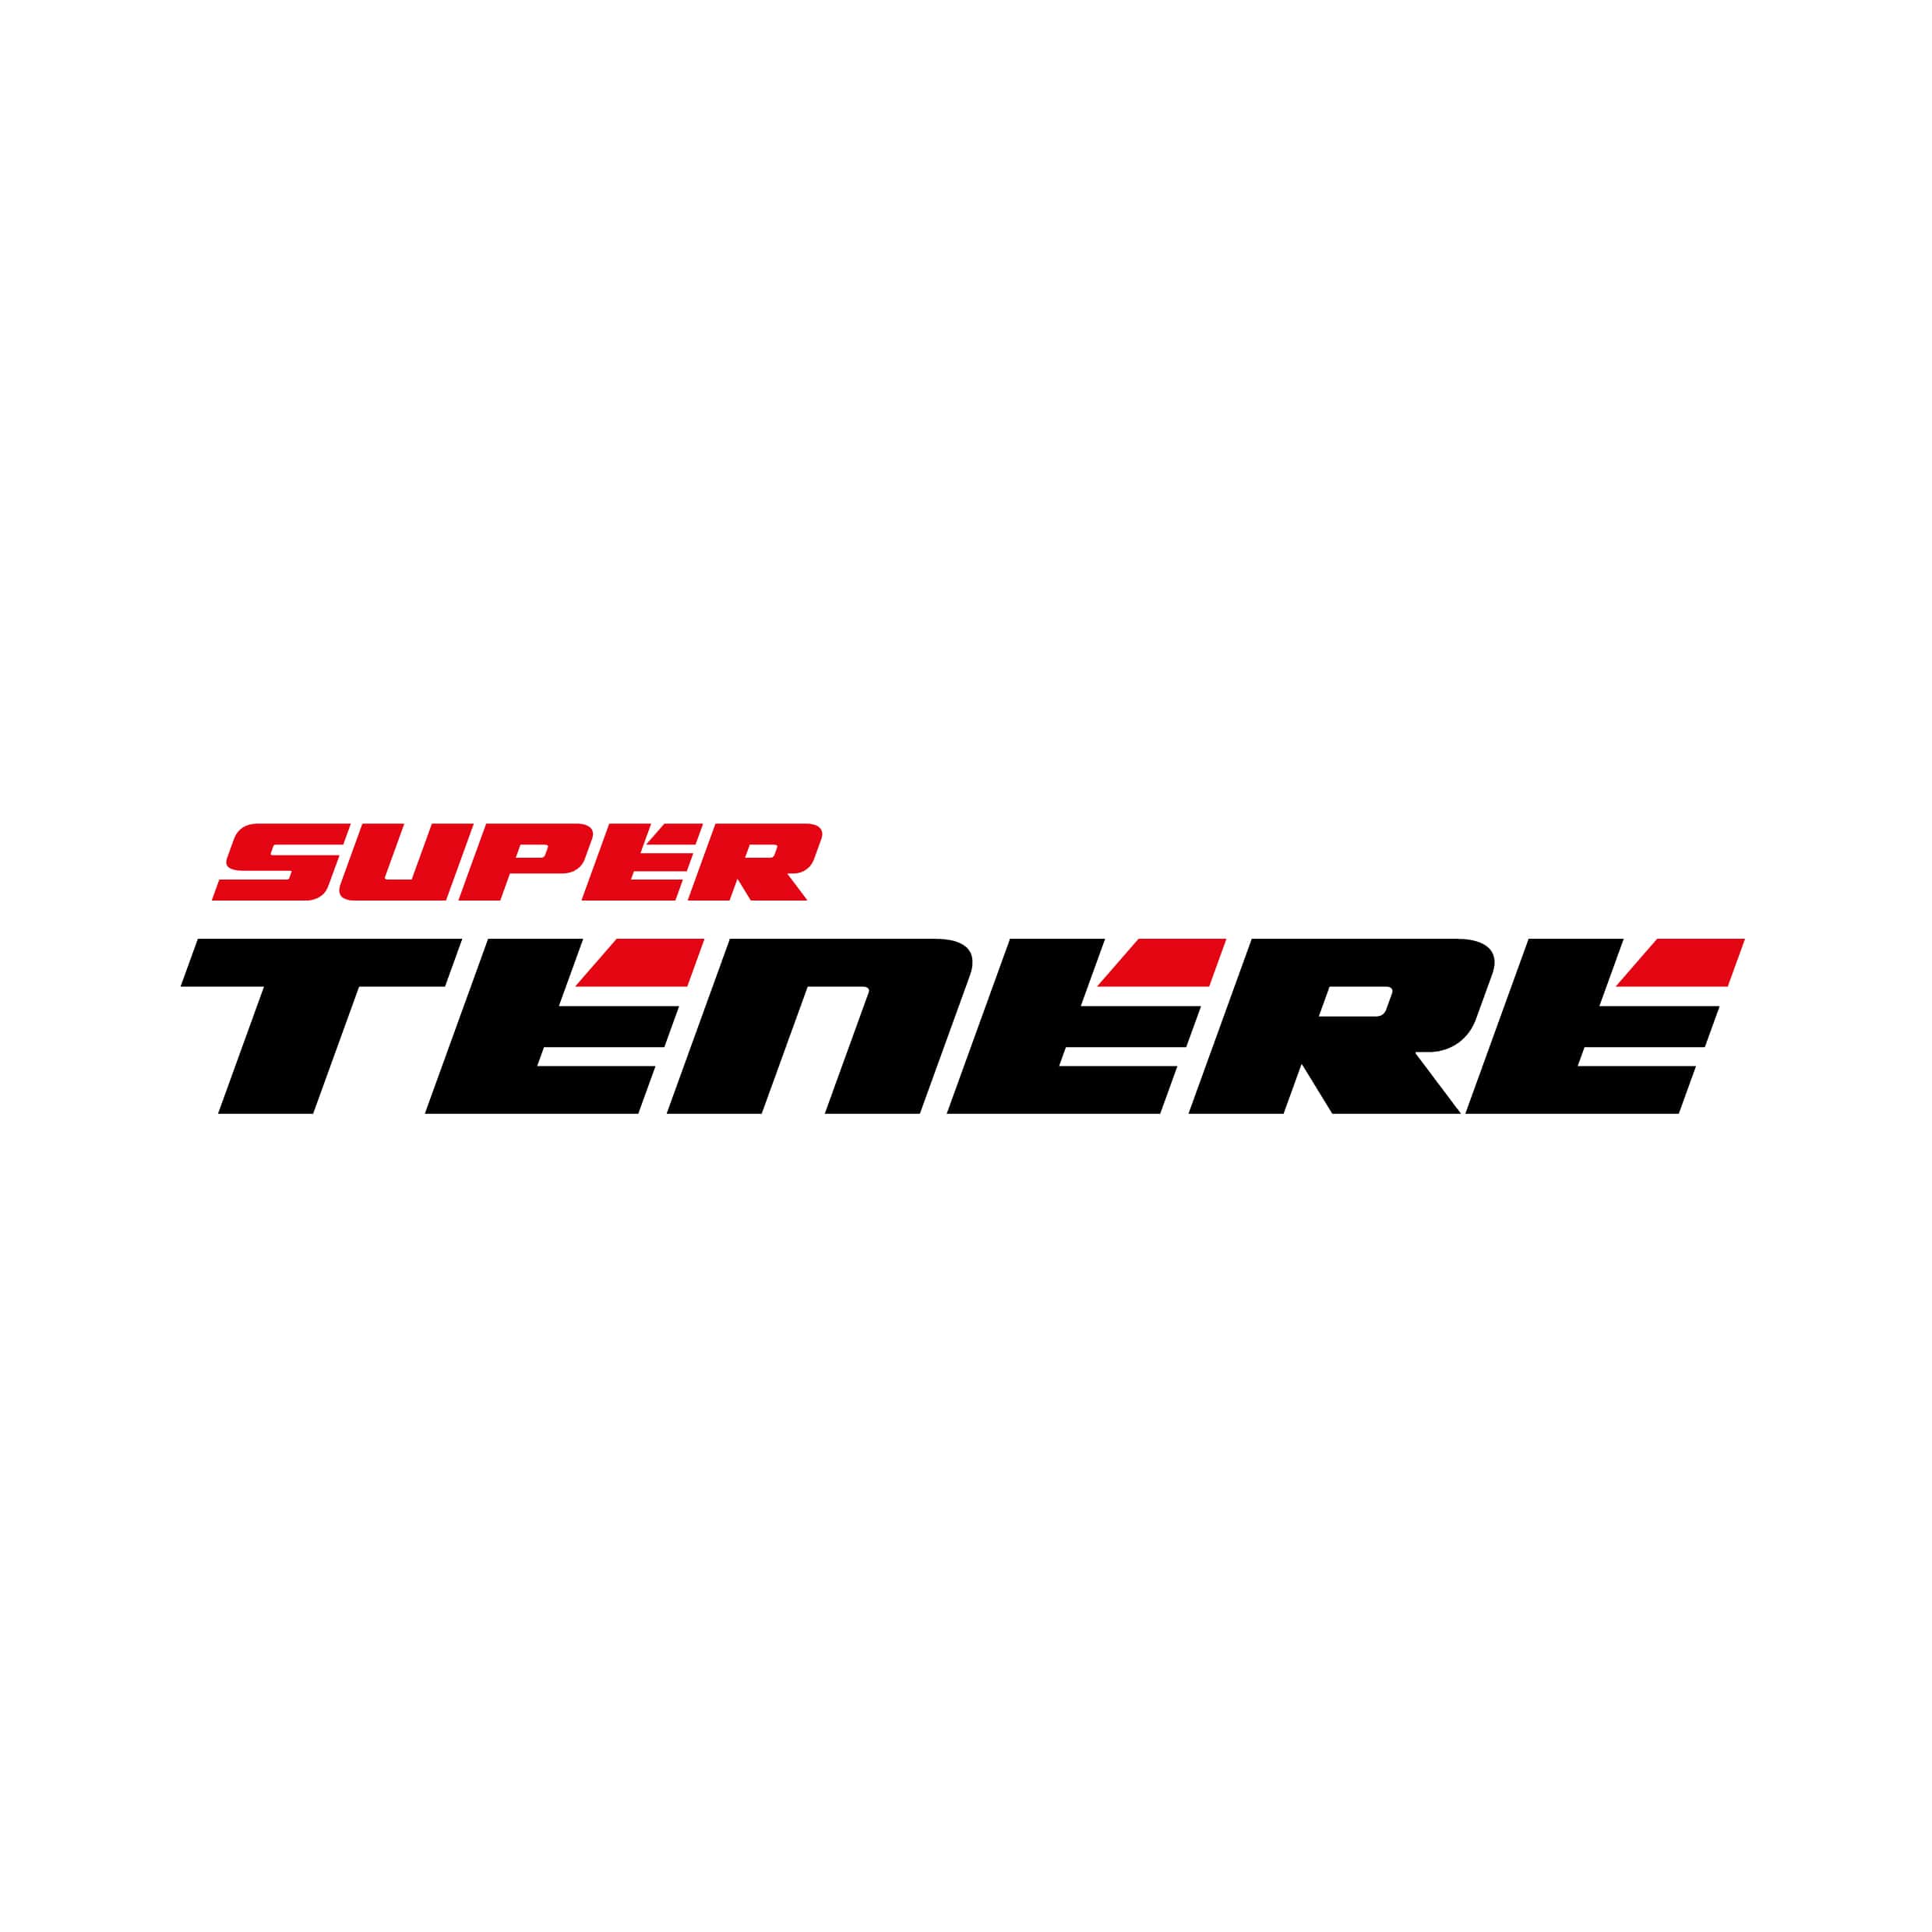 stickers-super-tenere-yamaha-ref70-autocollant-moto-sticker-deux-roue-autocollants-decals-sponsors-tuning-sport-logo-bike-scooter-min